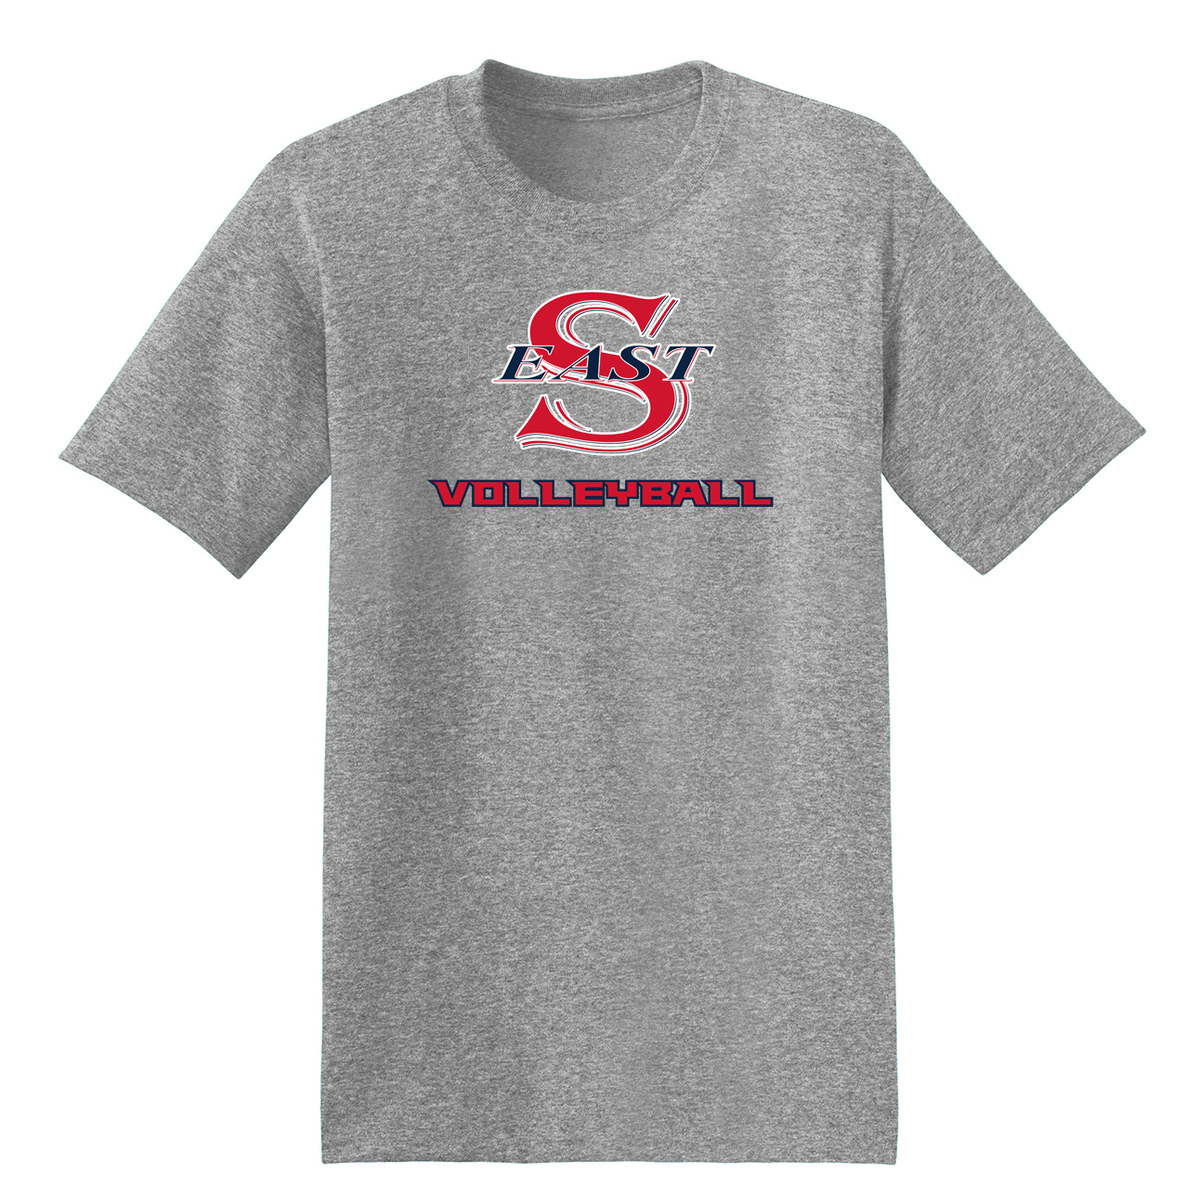 Smithtown East Volleyball T-Shirt